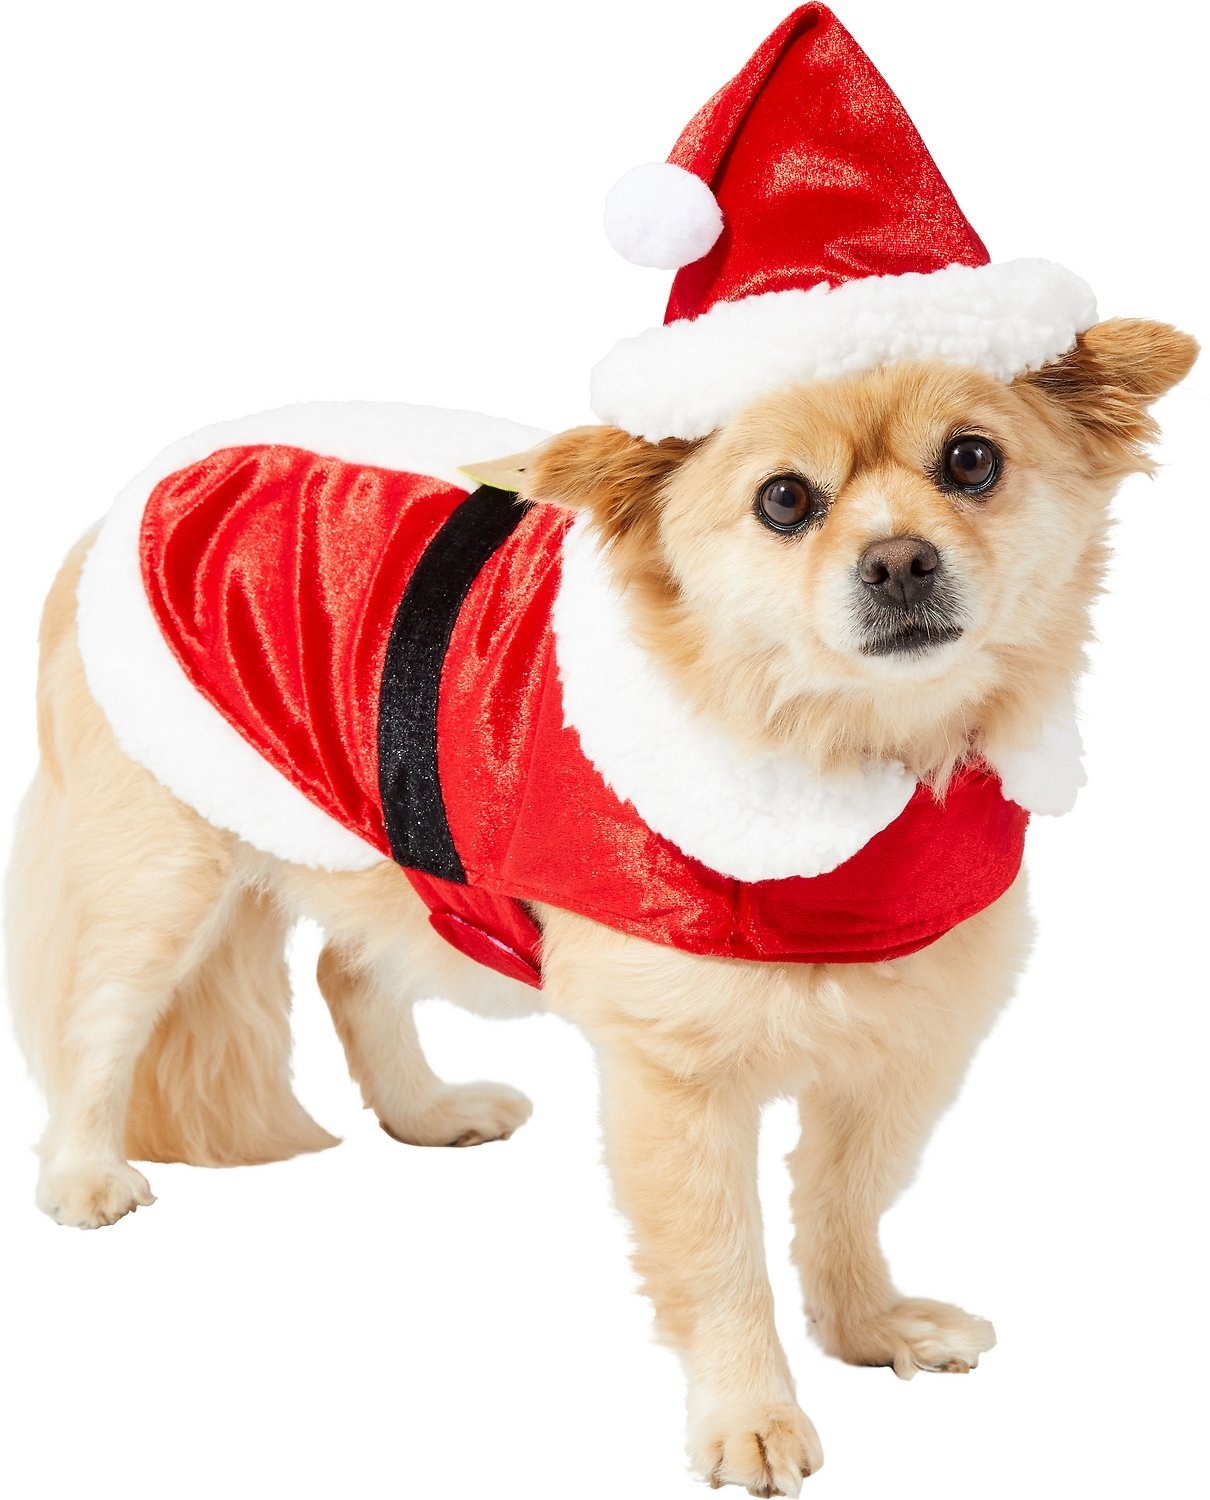 A cute dog wearing a Santa costume.